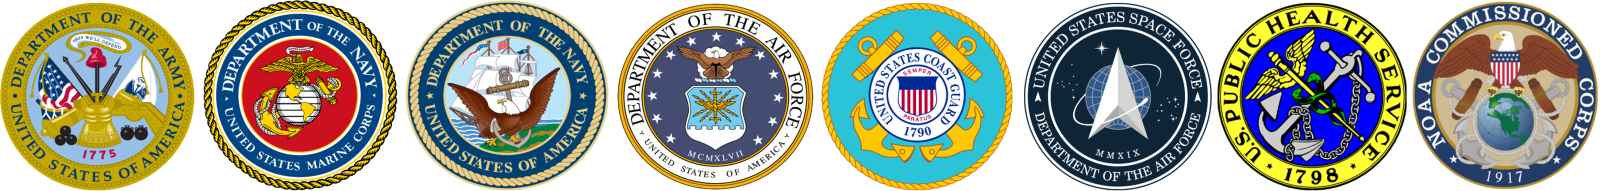 Military Department Seals